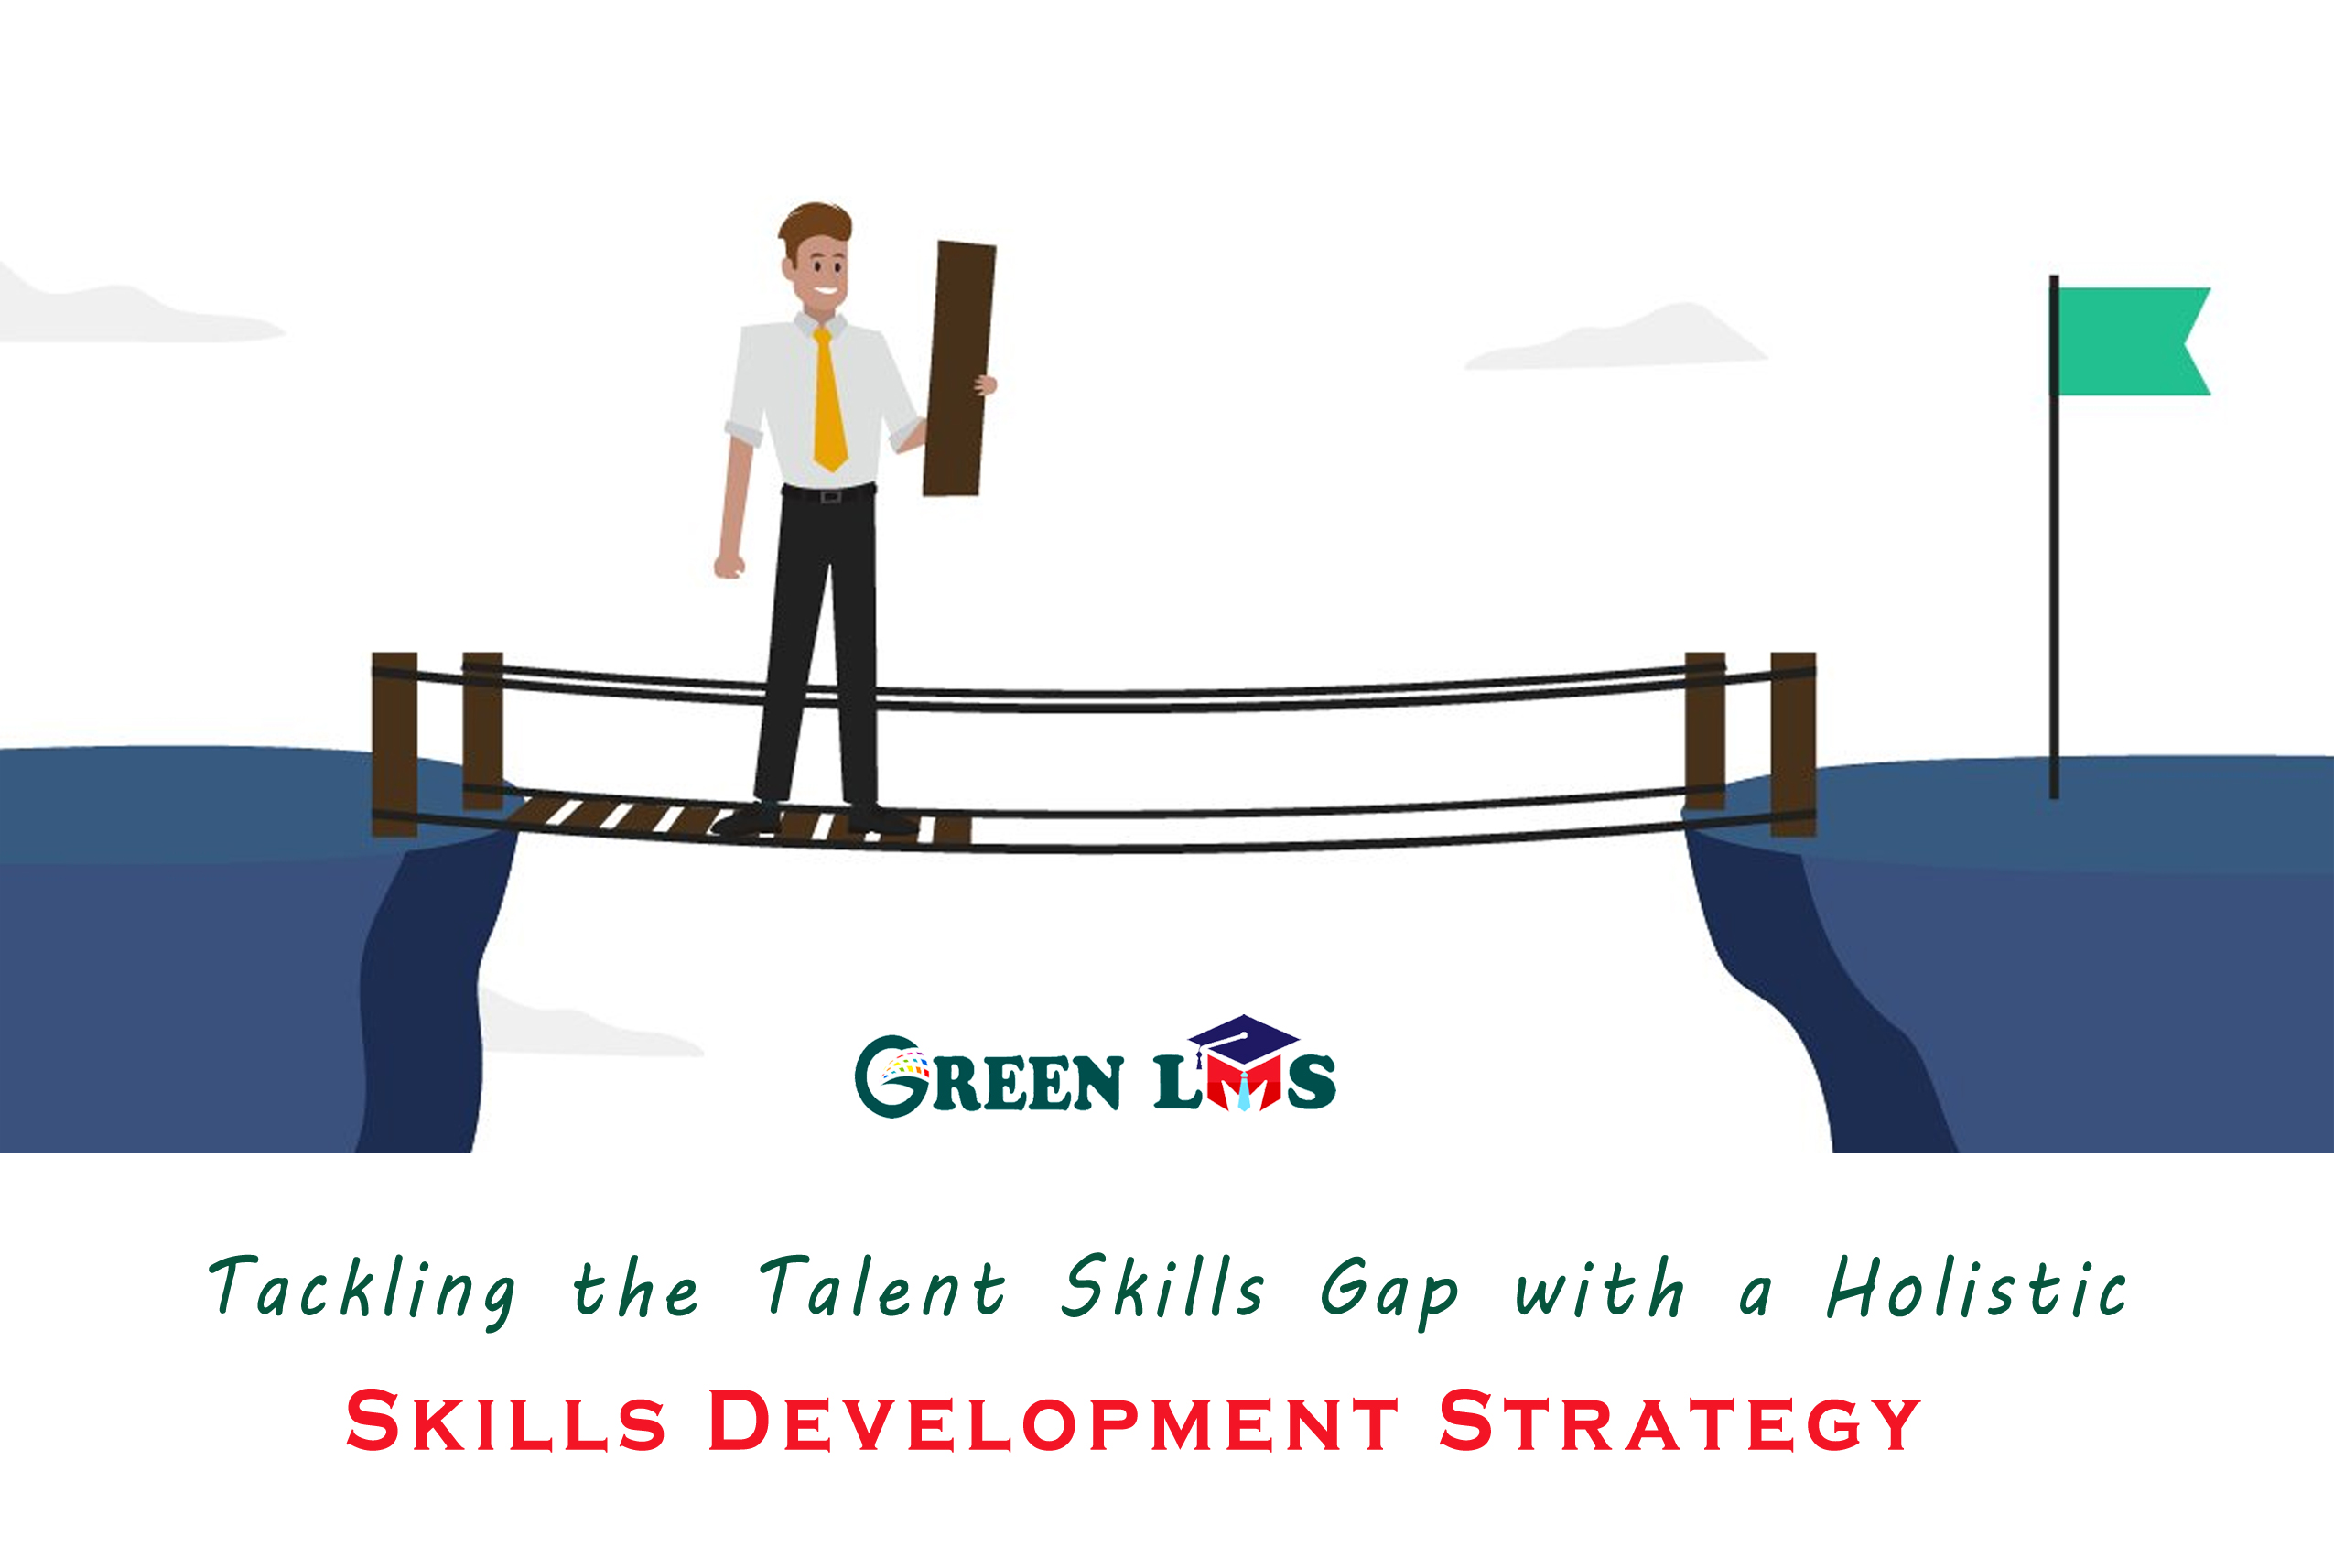 Skills Development Strategy